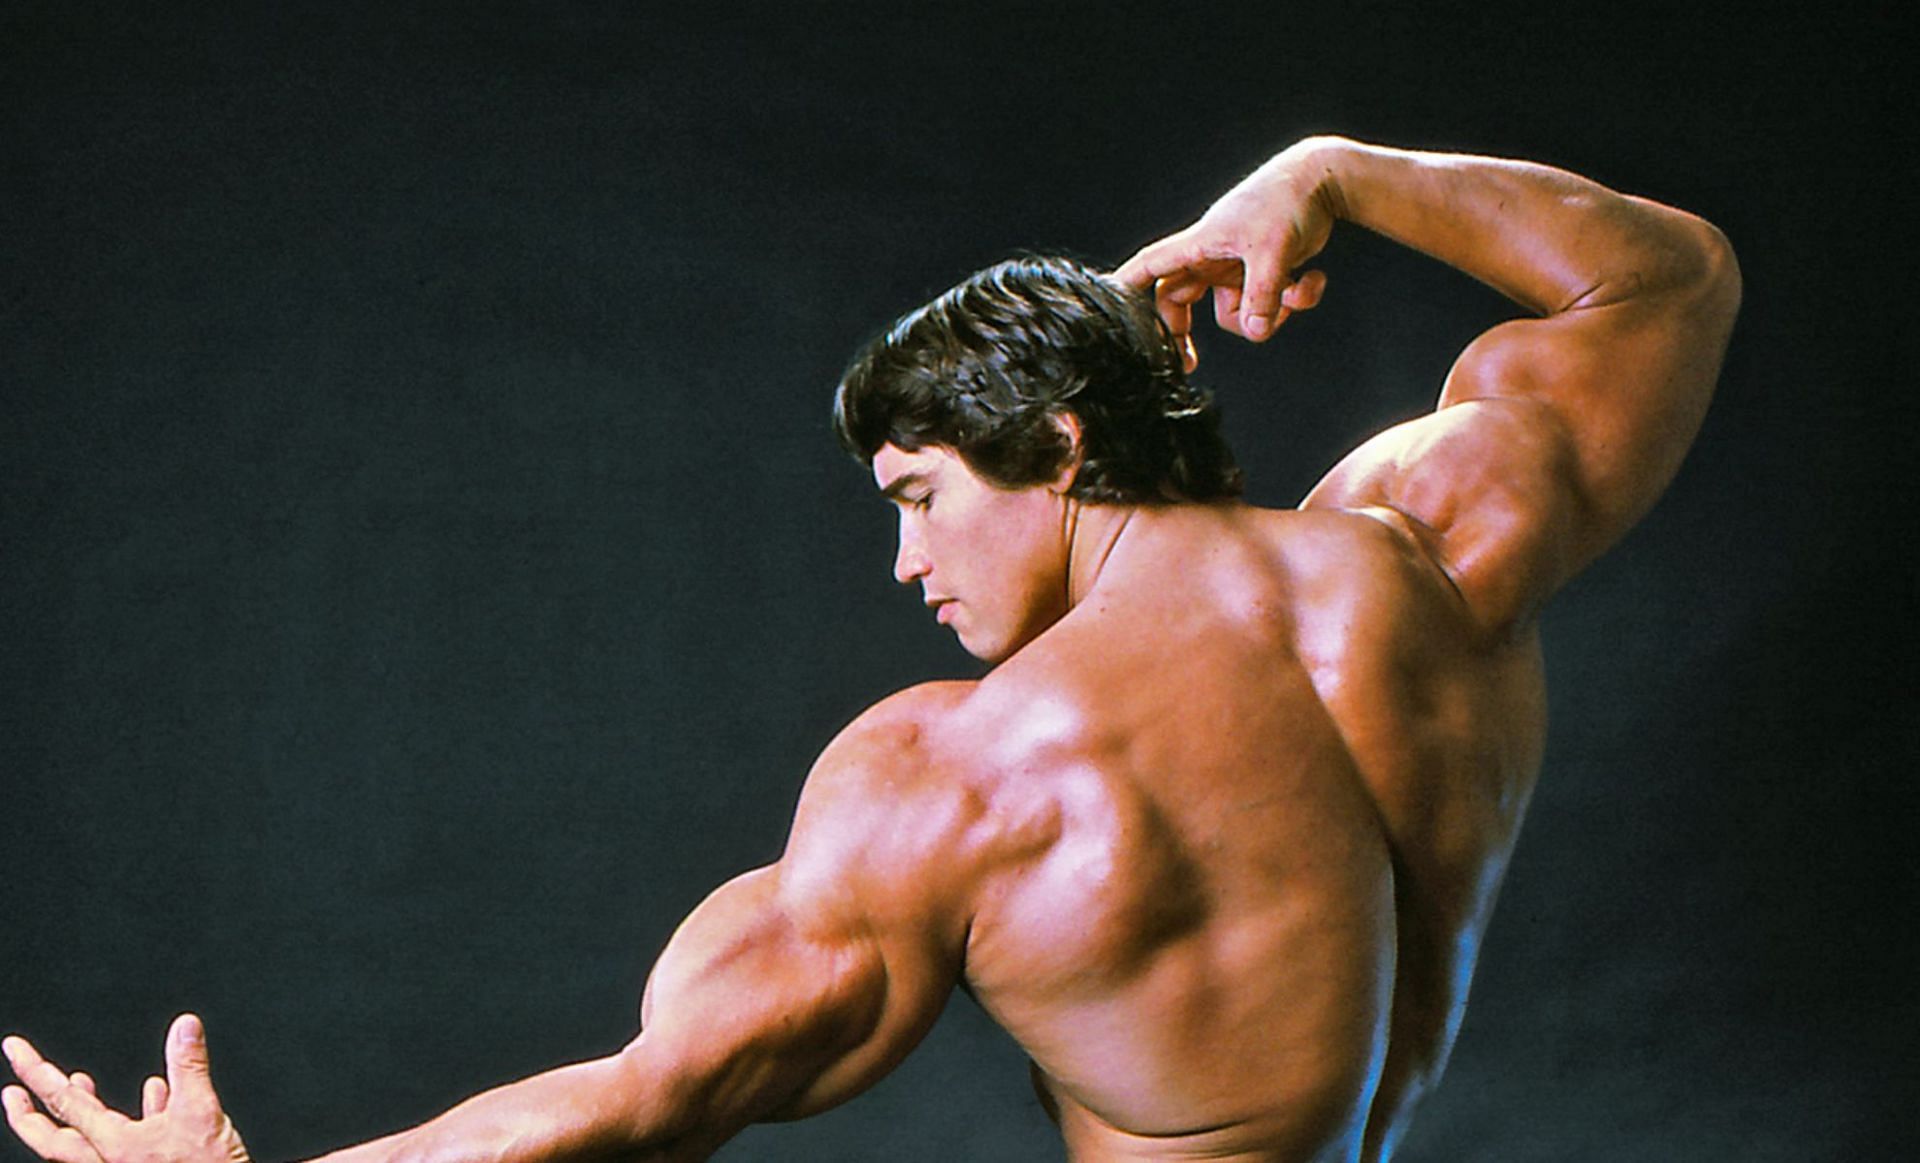 The bodybuilder had huge biceps (Image via Men